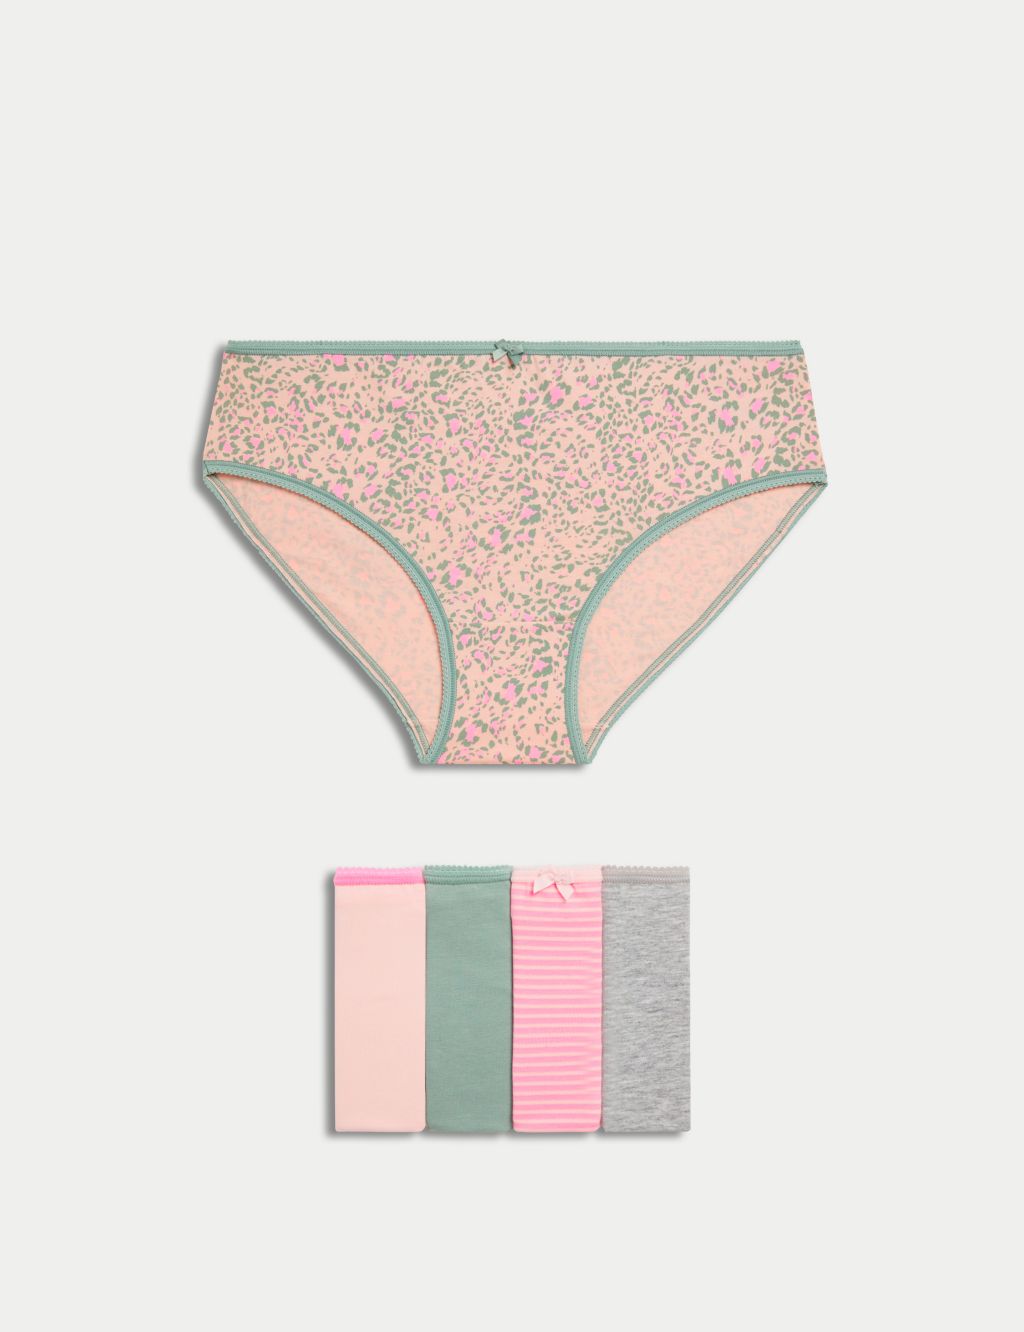 20.0% OFF on Marks & Spencer Women Bikini Knickers Microfibre 4pk Soft Pink